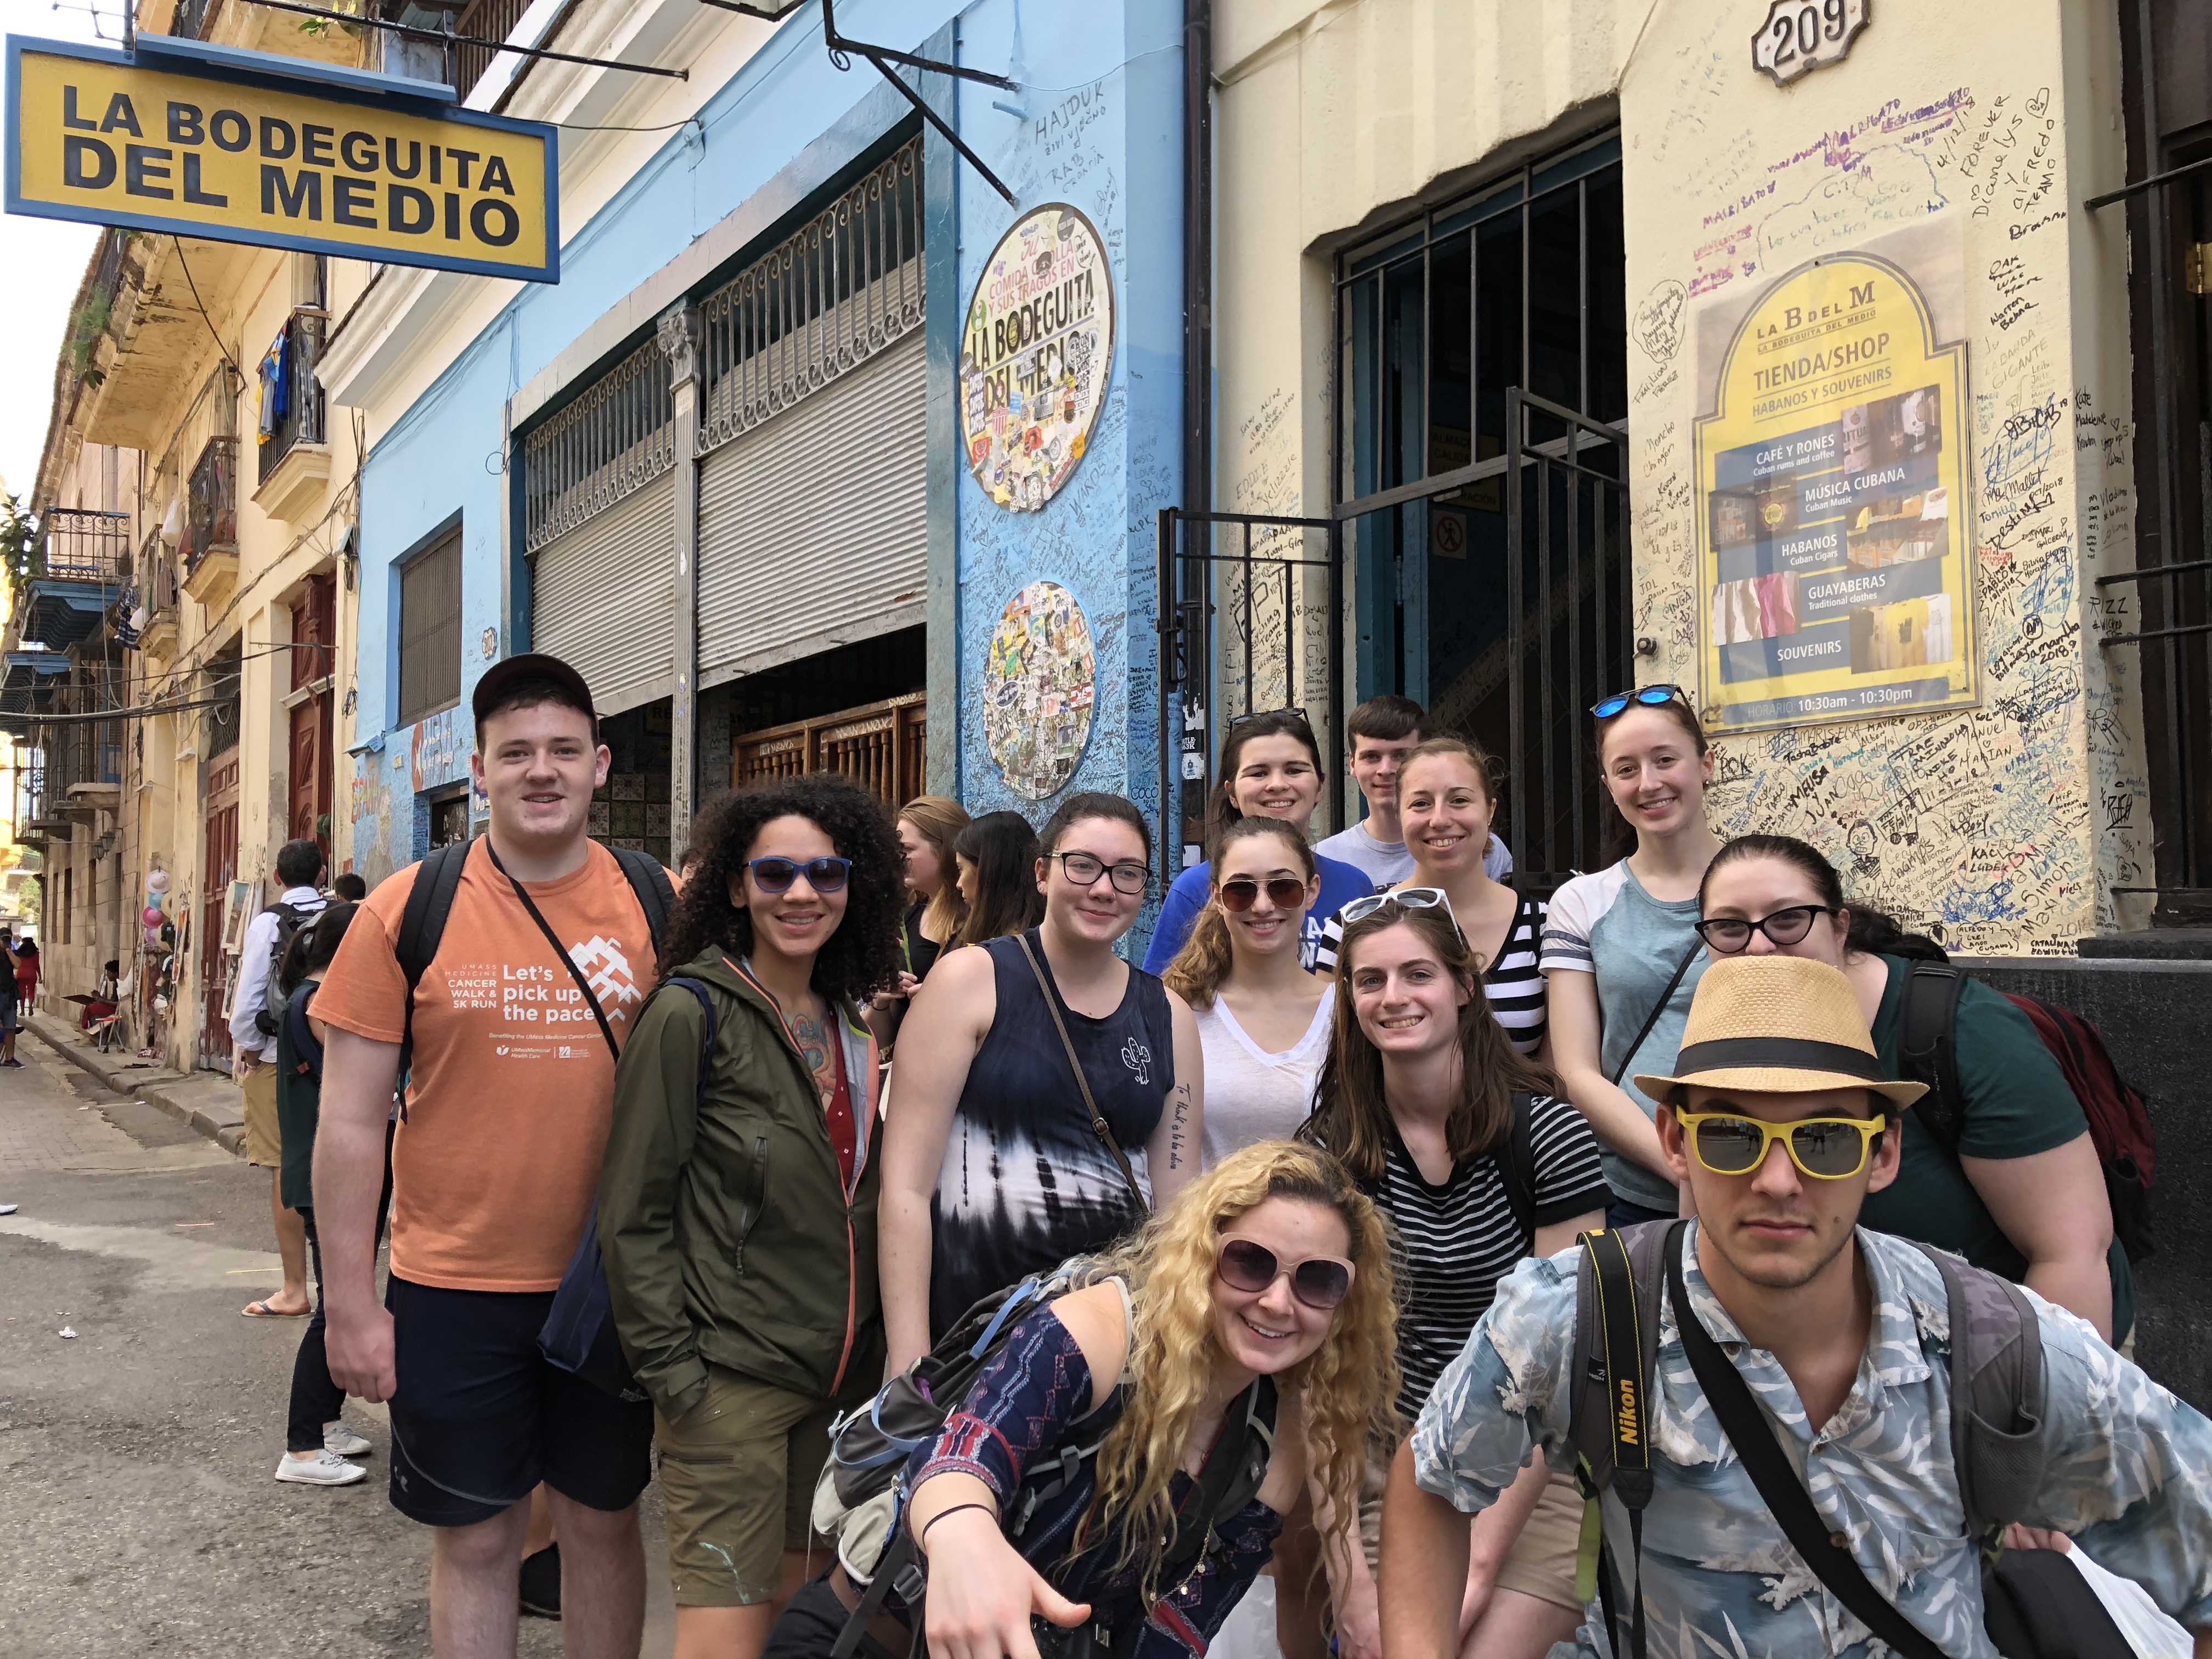 Students pose before La Bodegita del Medio, a bar in Old Havana popular for their mojitos.